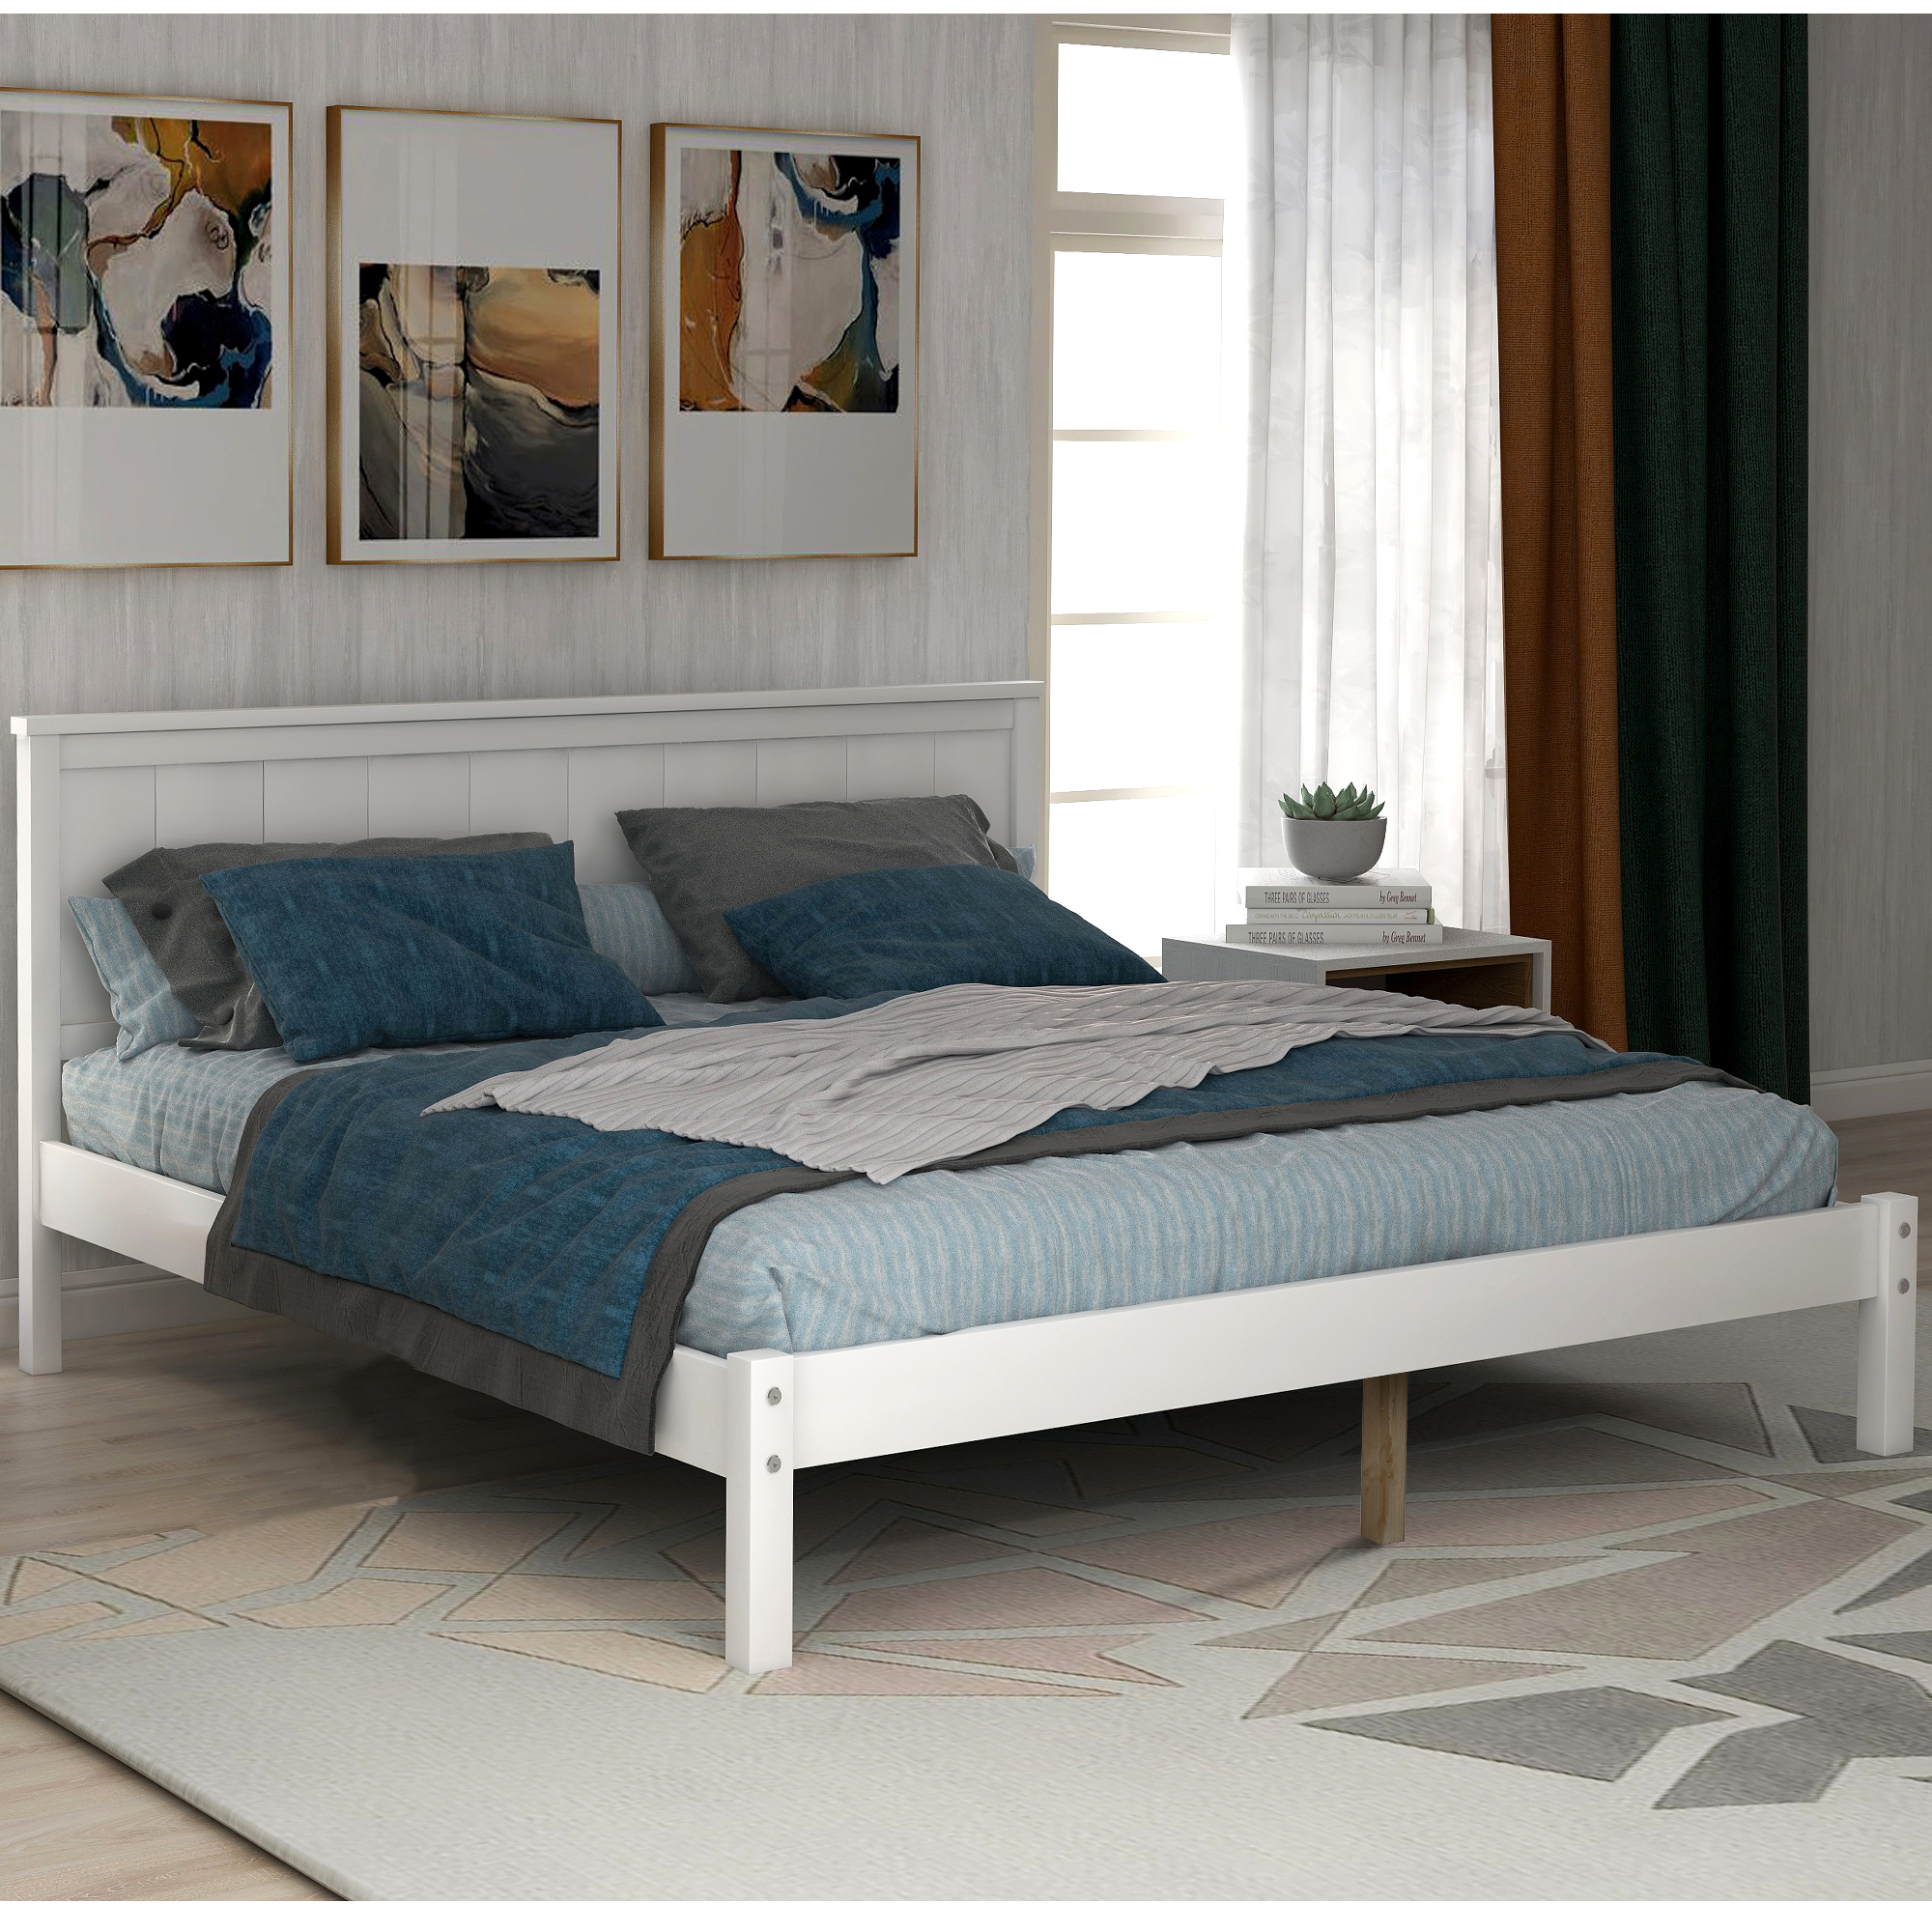 Details about   Full Size Wooden Bed Frame Platform Wooden Slat Support w/ Headboard Walnut NEW 